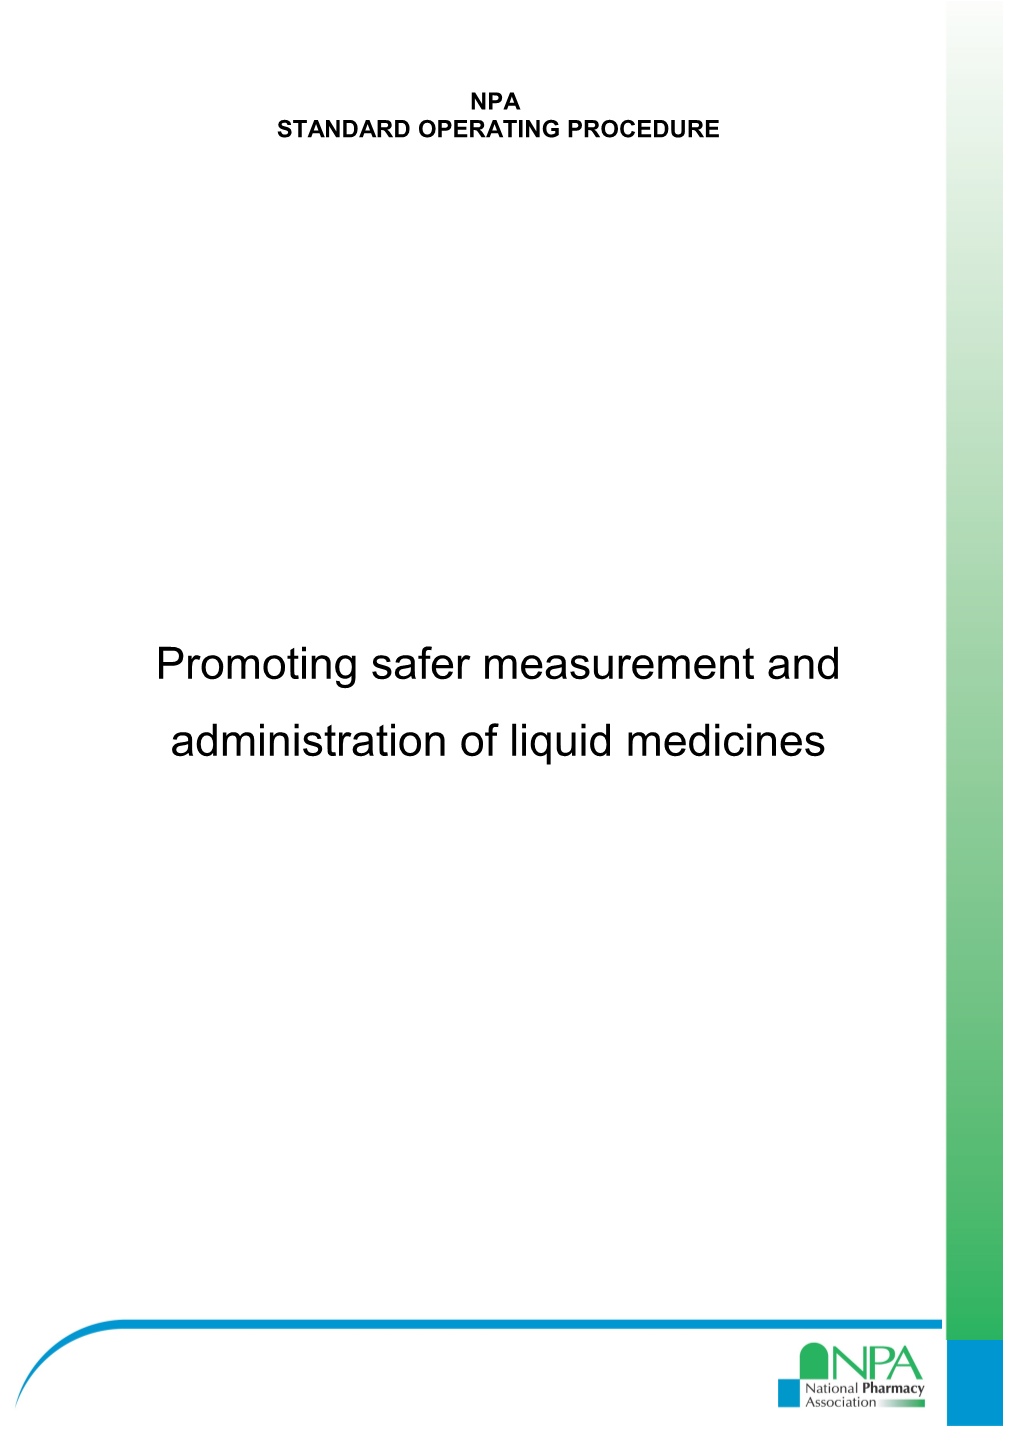 Measurement and Administration of Liquid Medicines